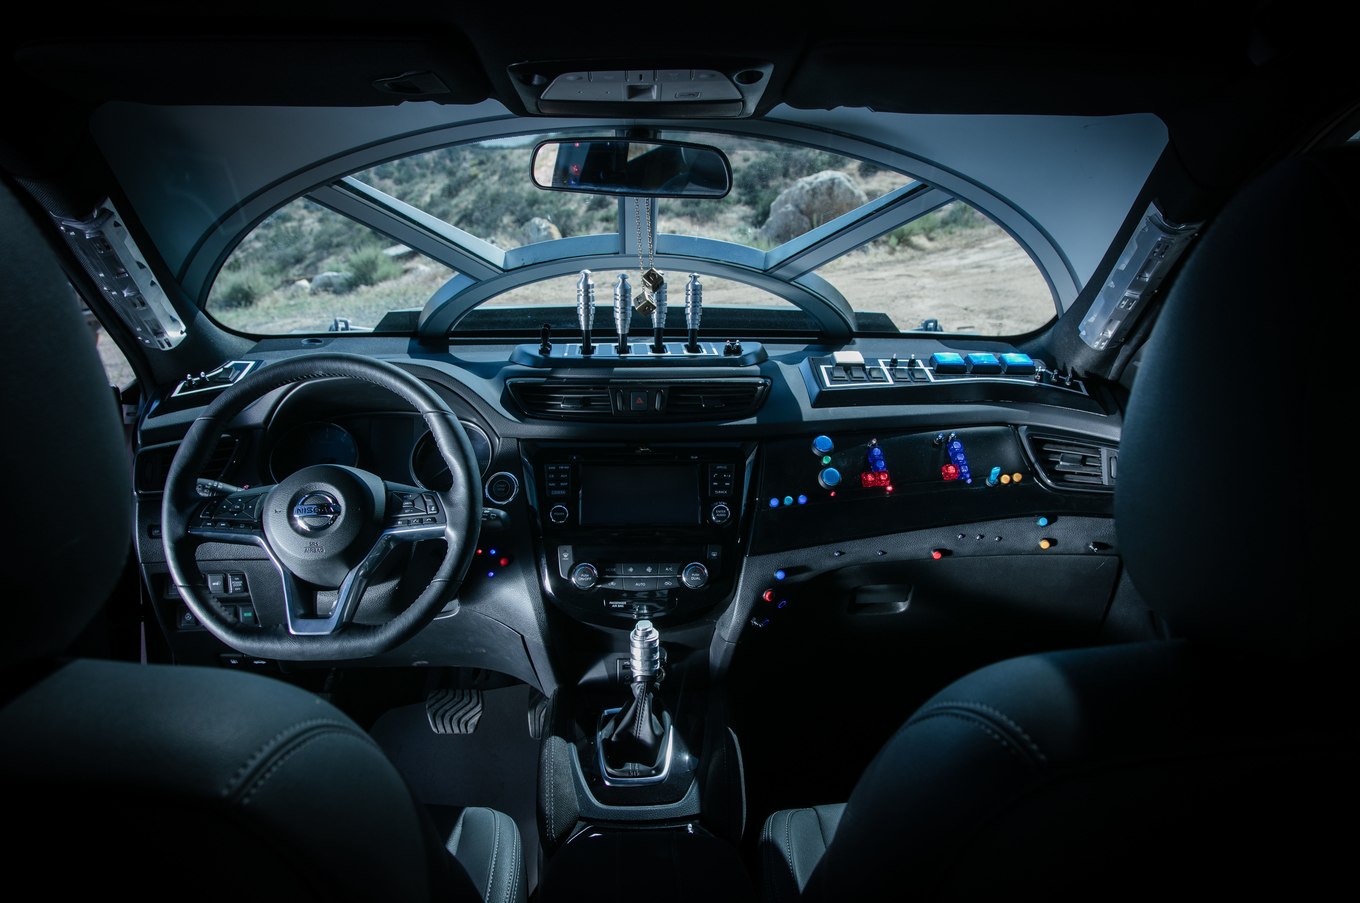 2018-Nissan-Rogue-Star-Wars-cockpit.jpg